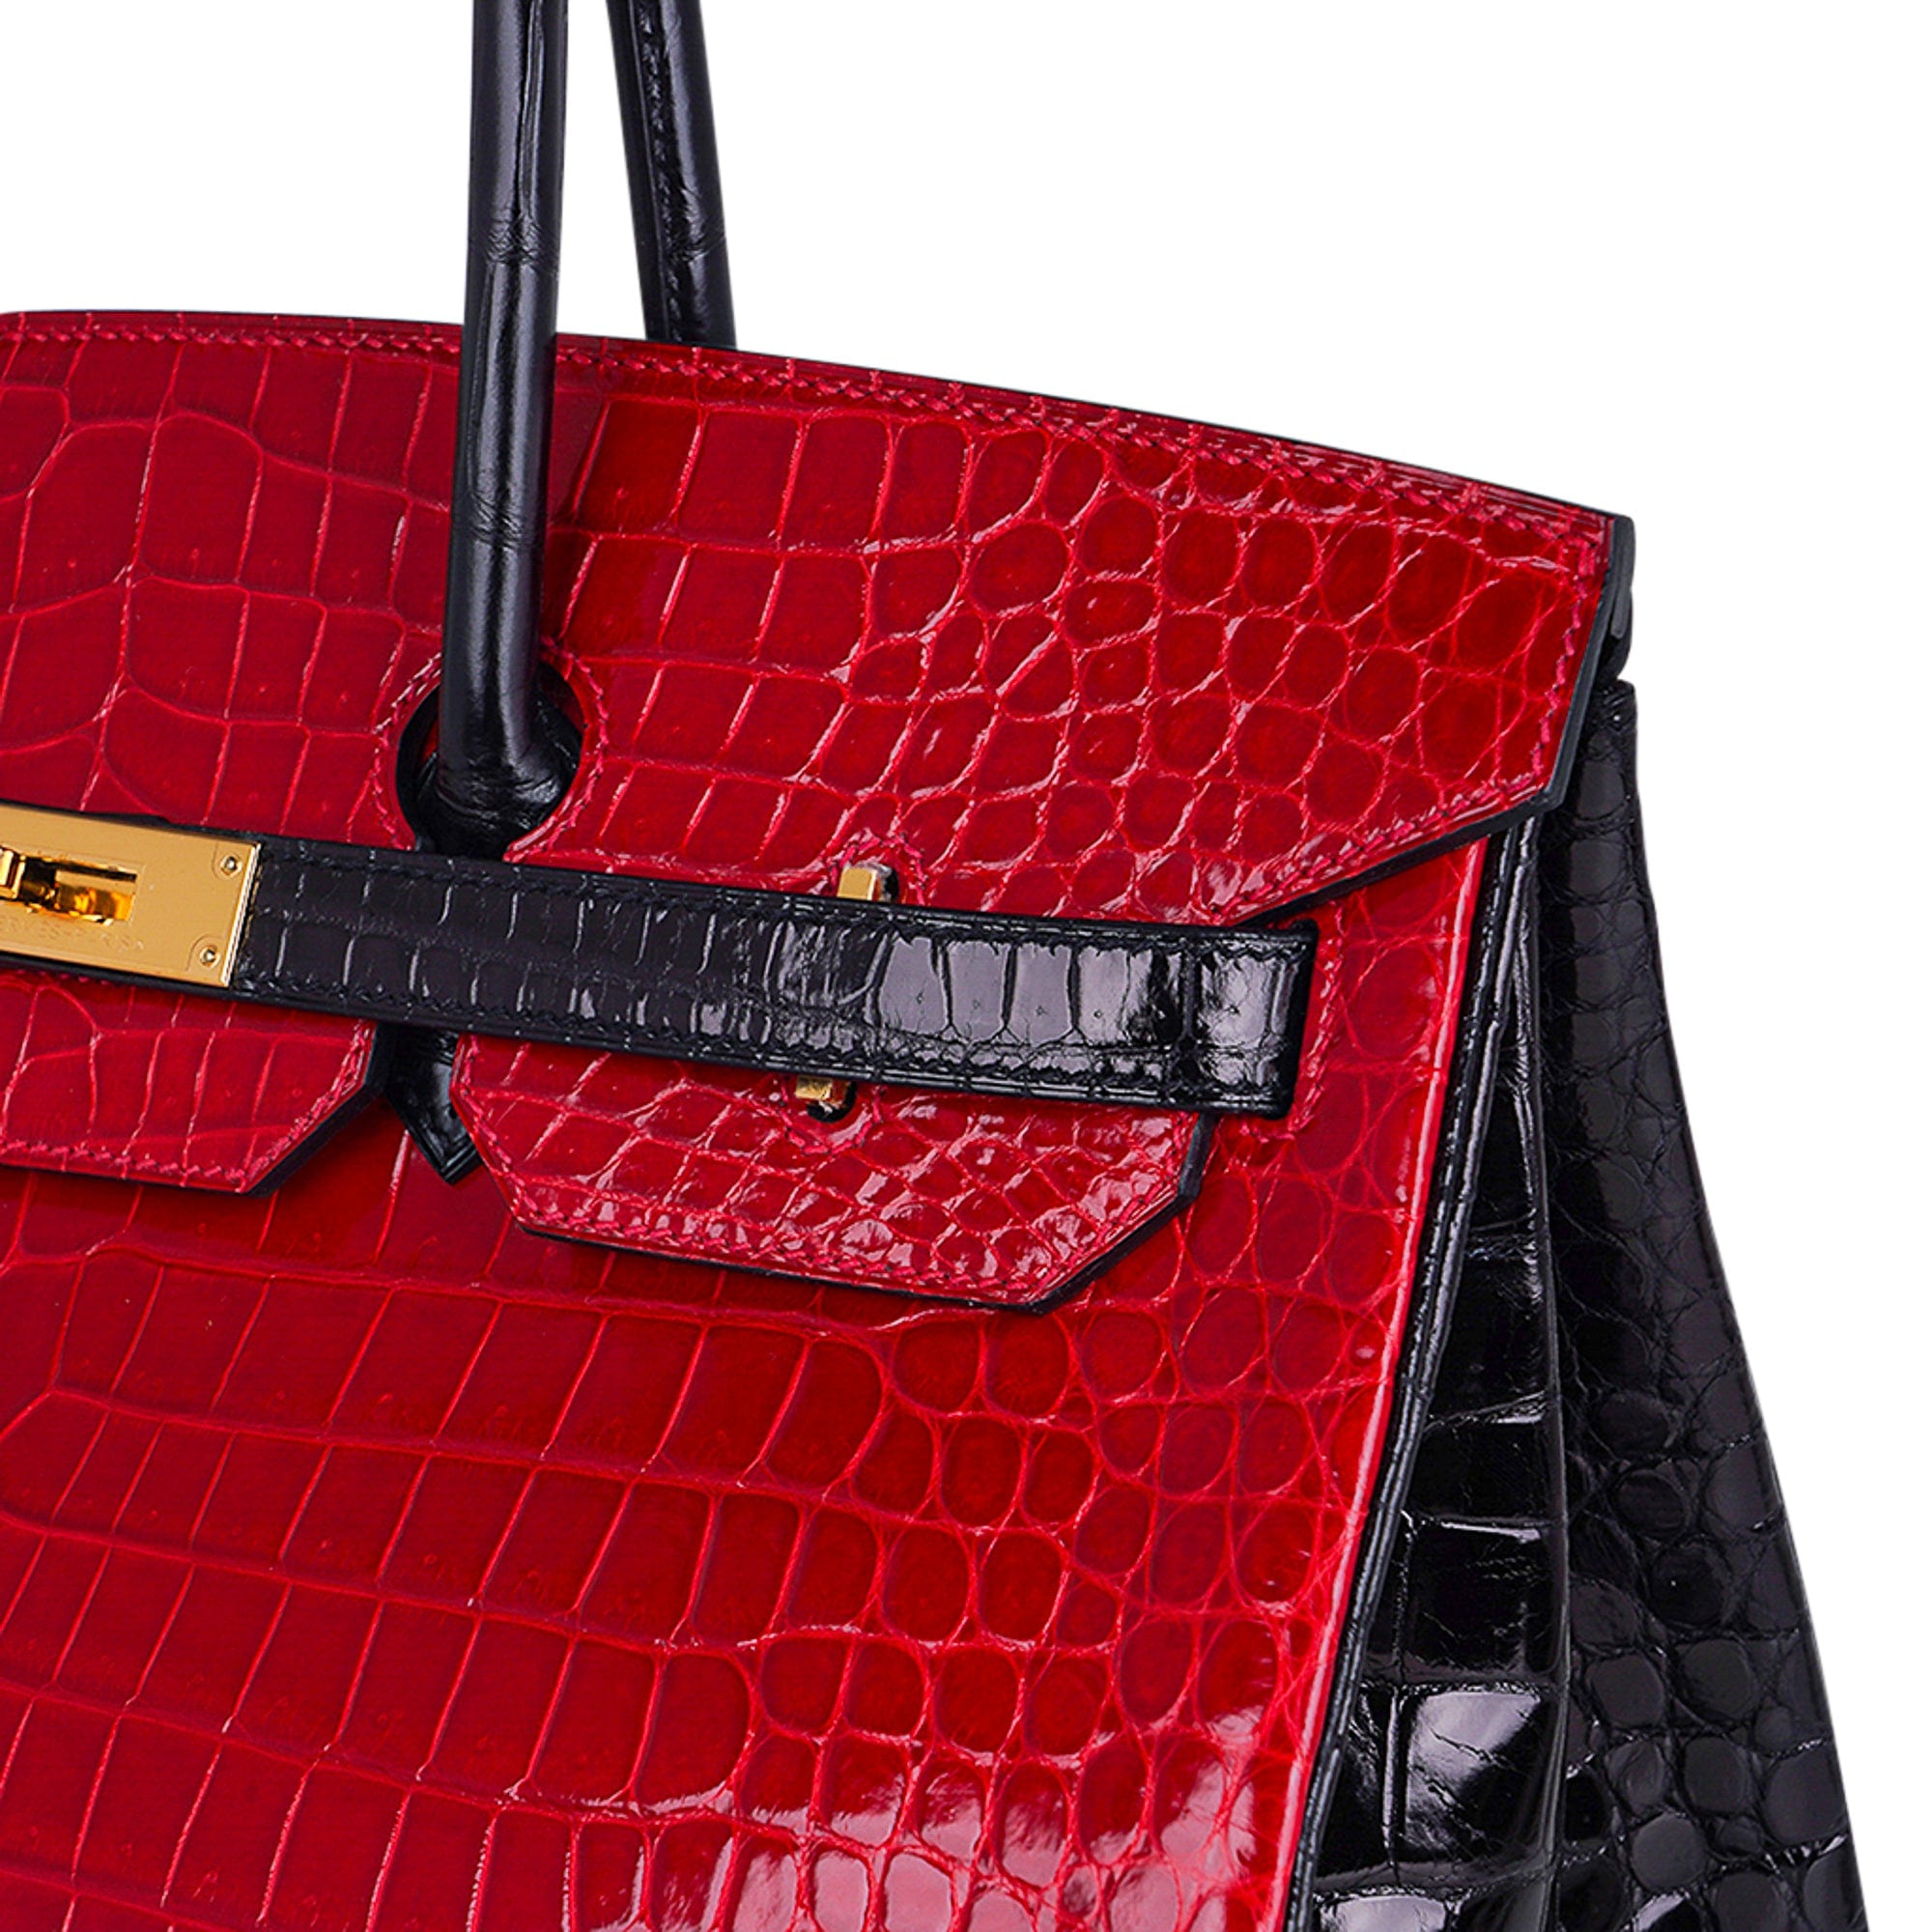 Hermès Birkin 35 Crocodile Bag Handbag Porosus New